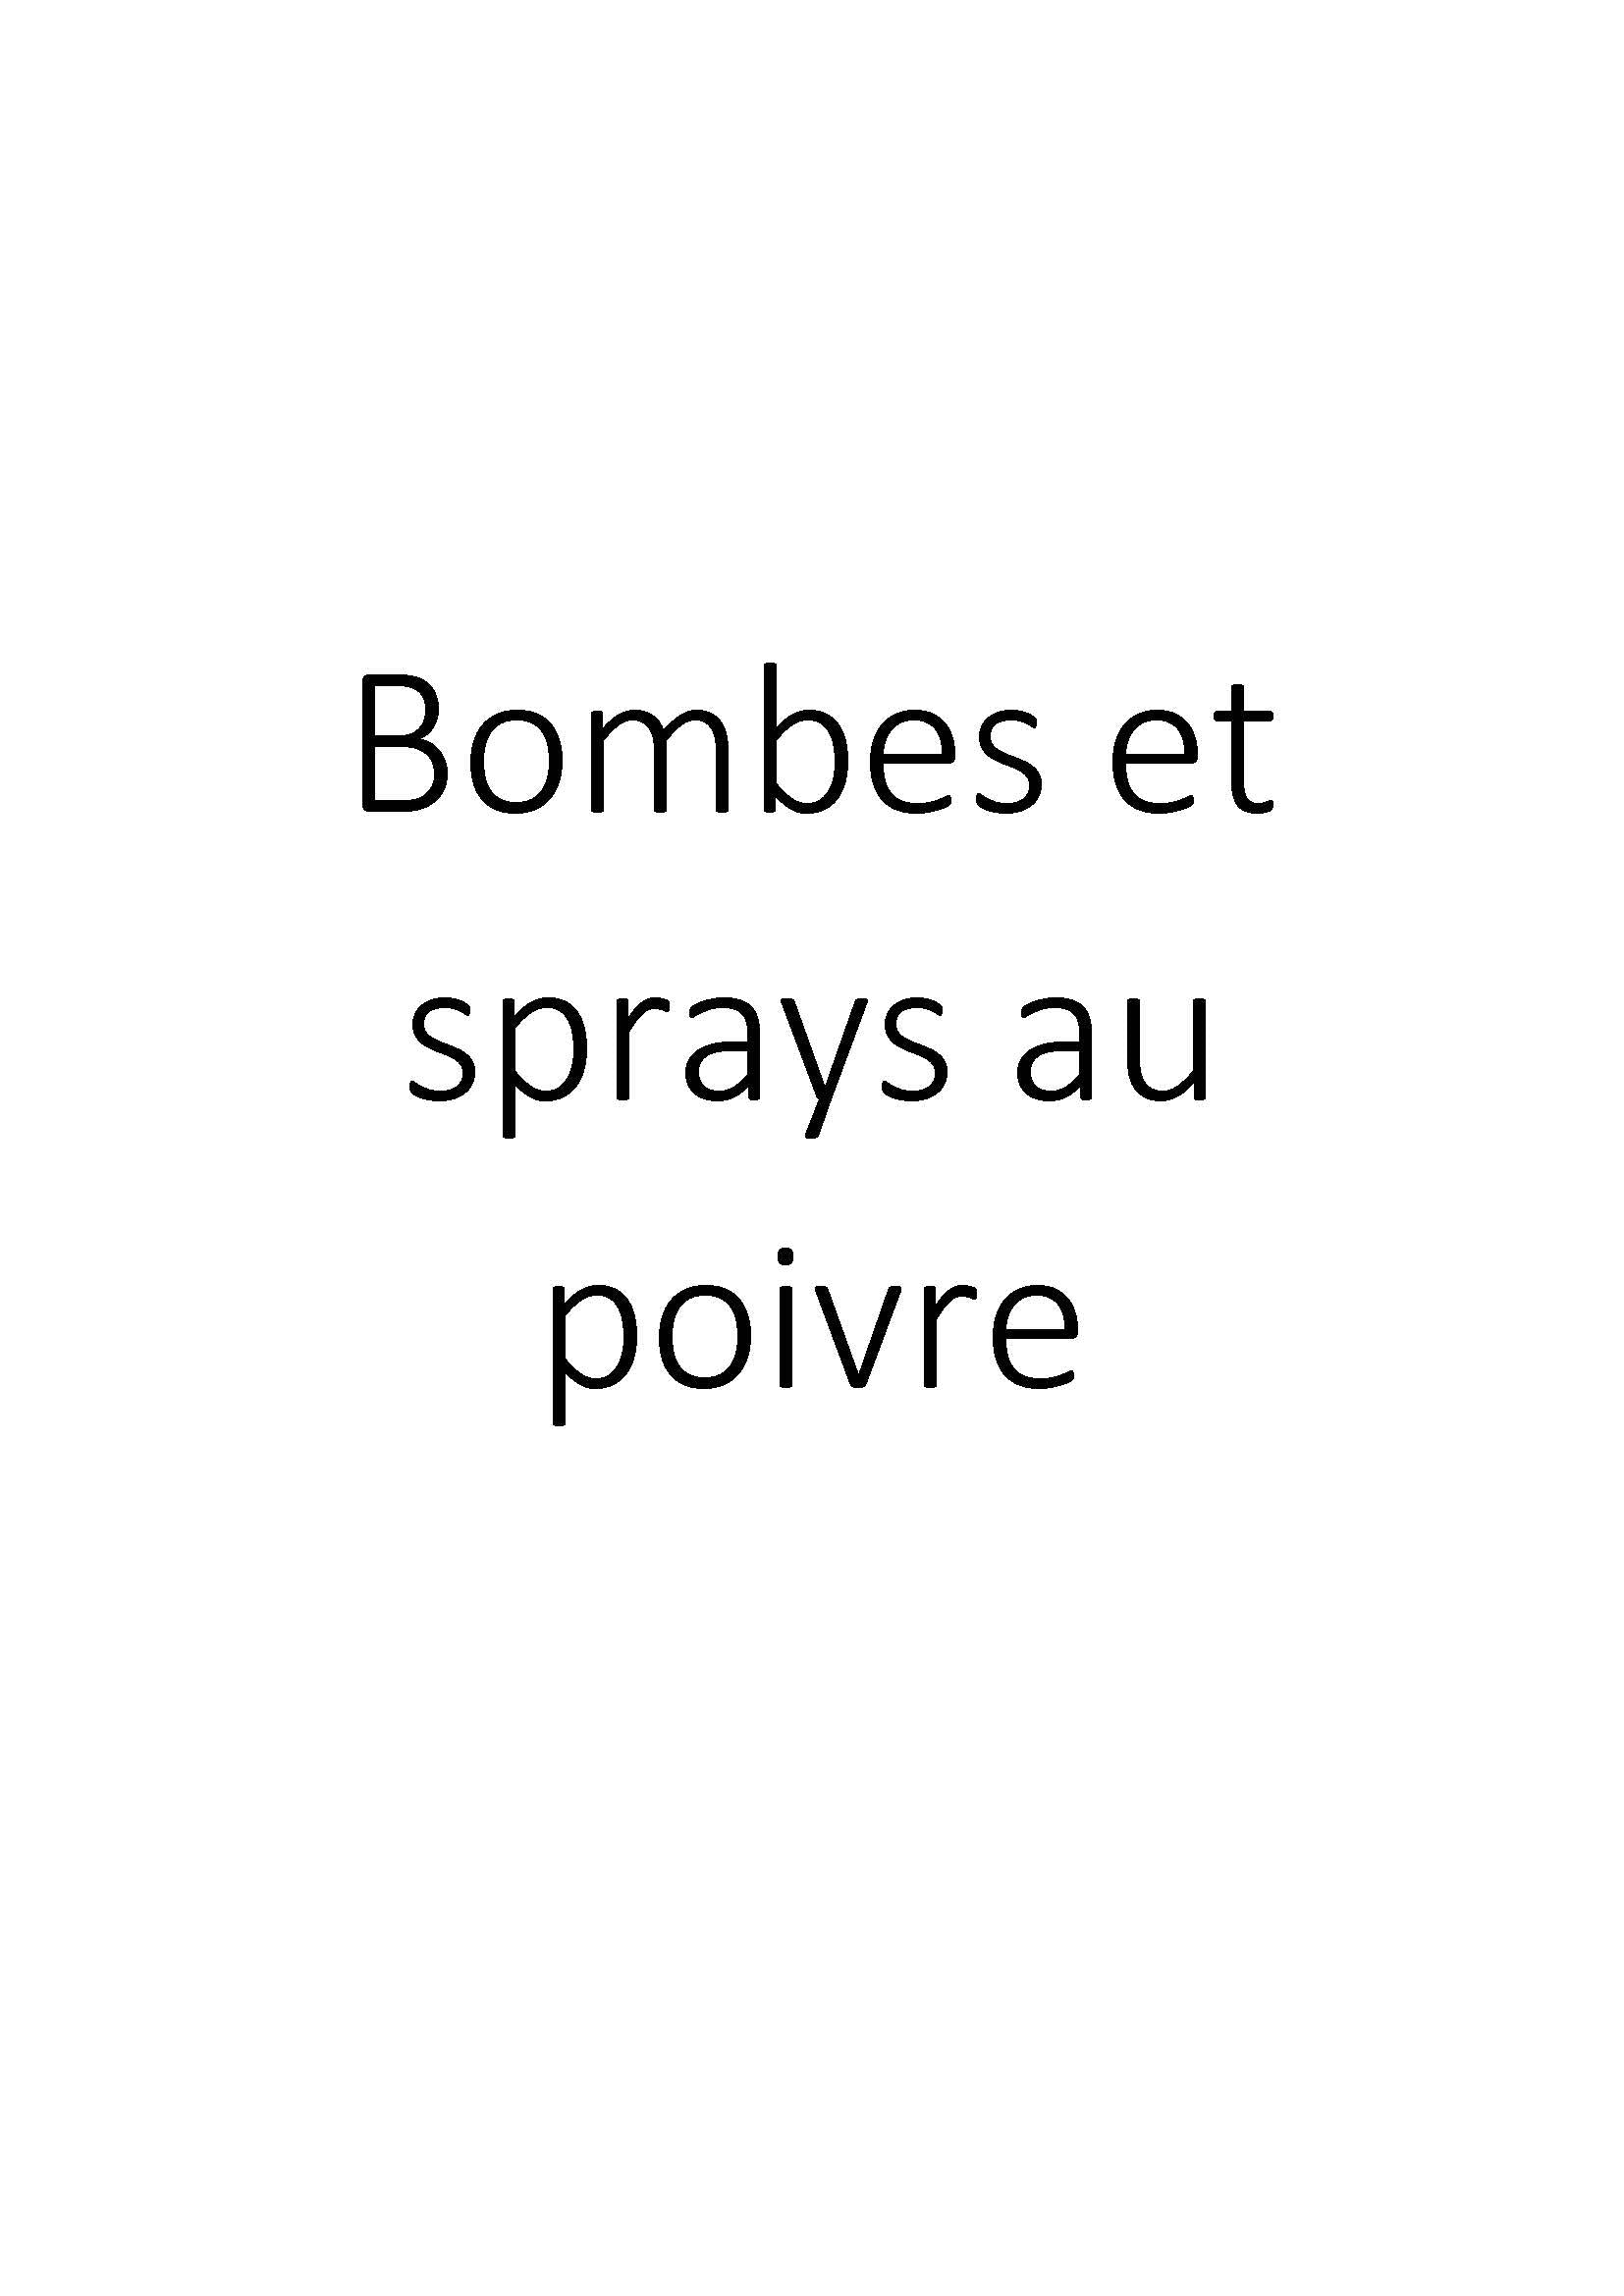 Bombes et sprays au poivre